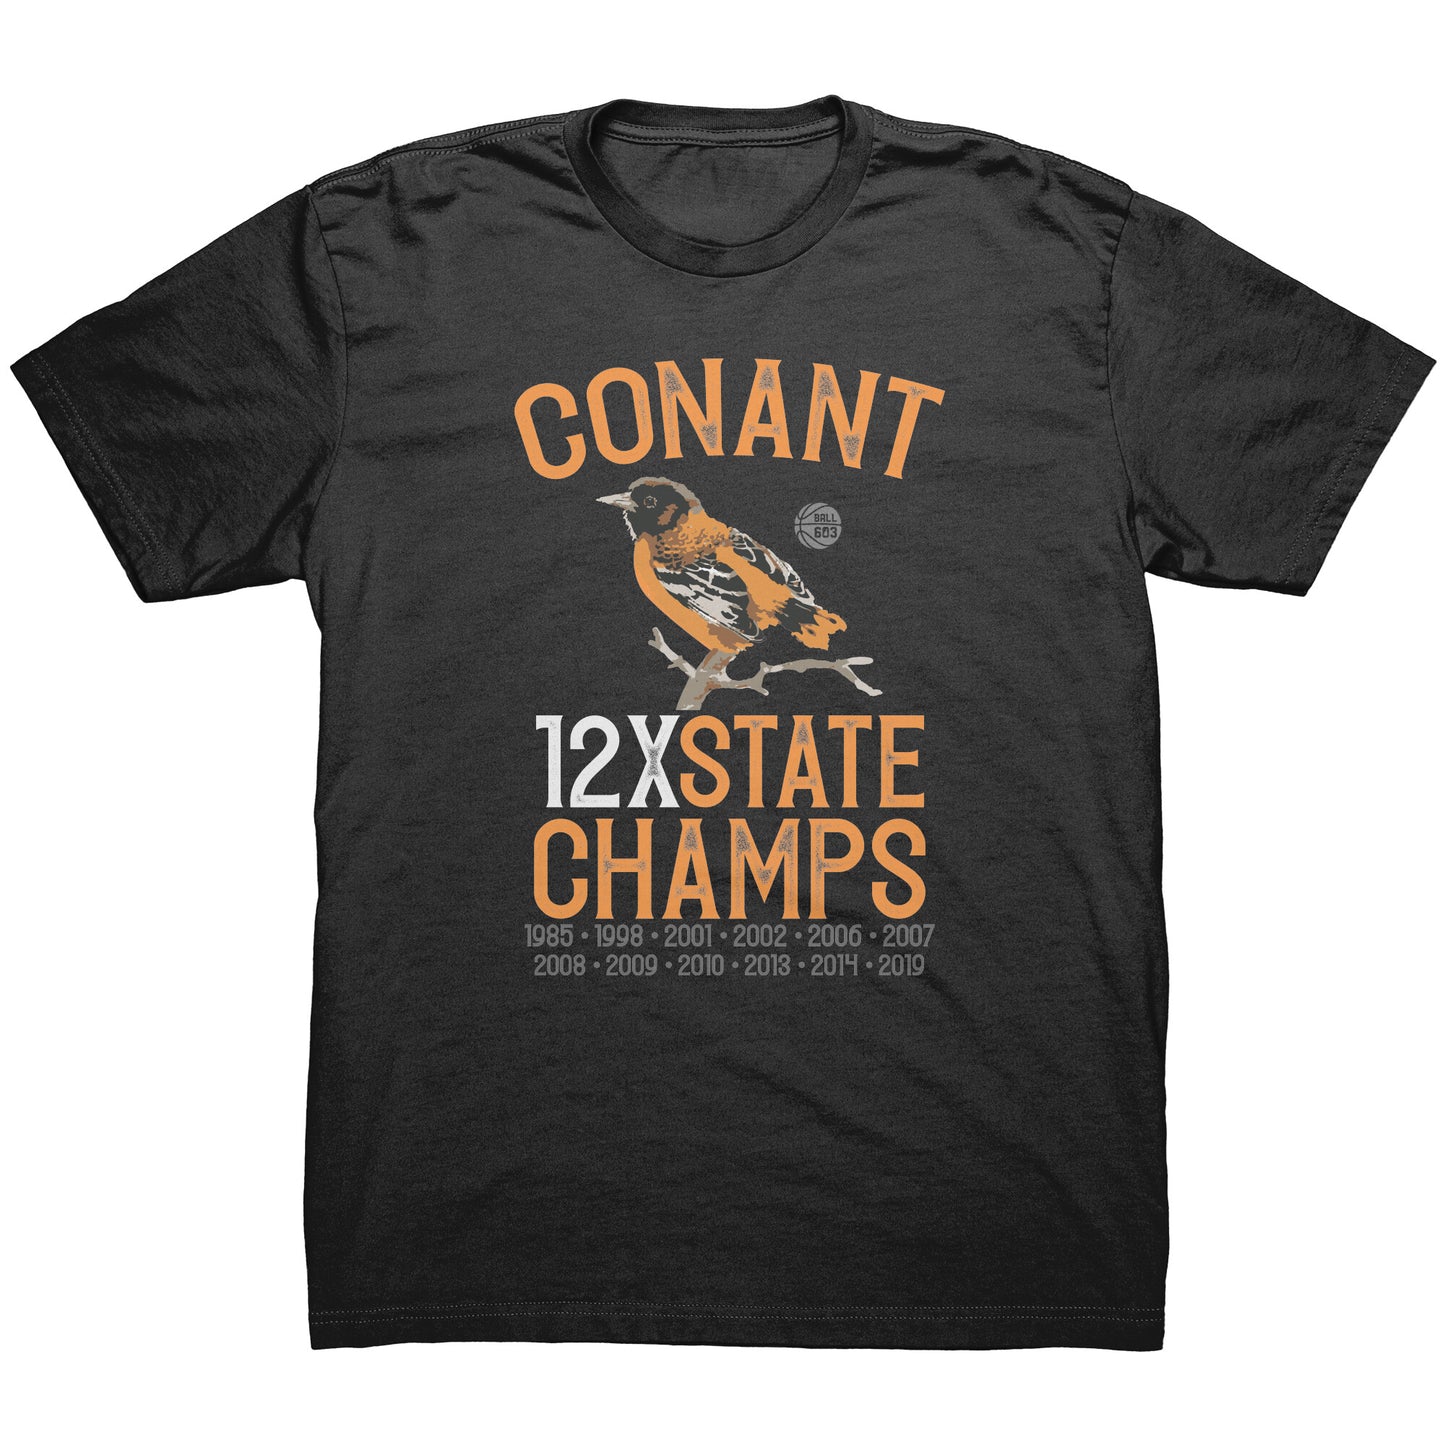 Conant State Champs (Men's Cut)